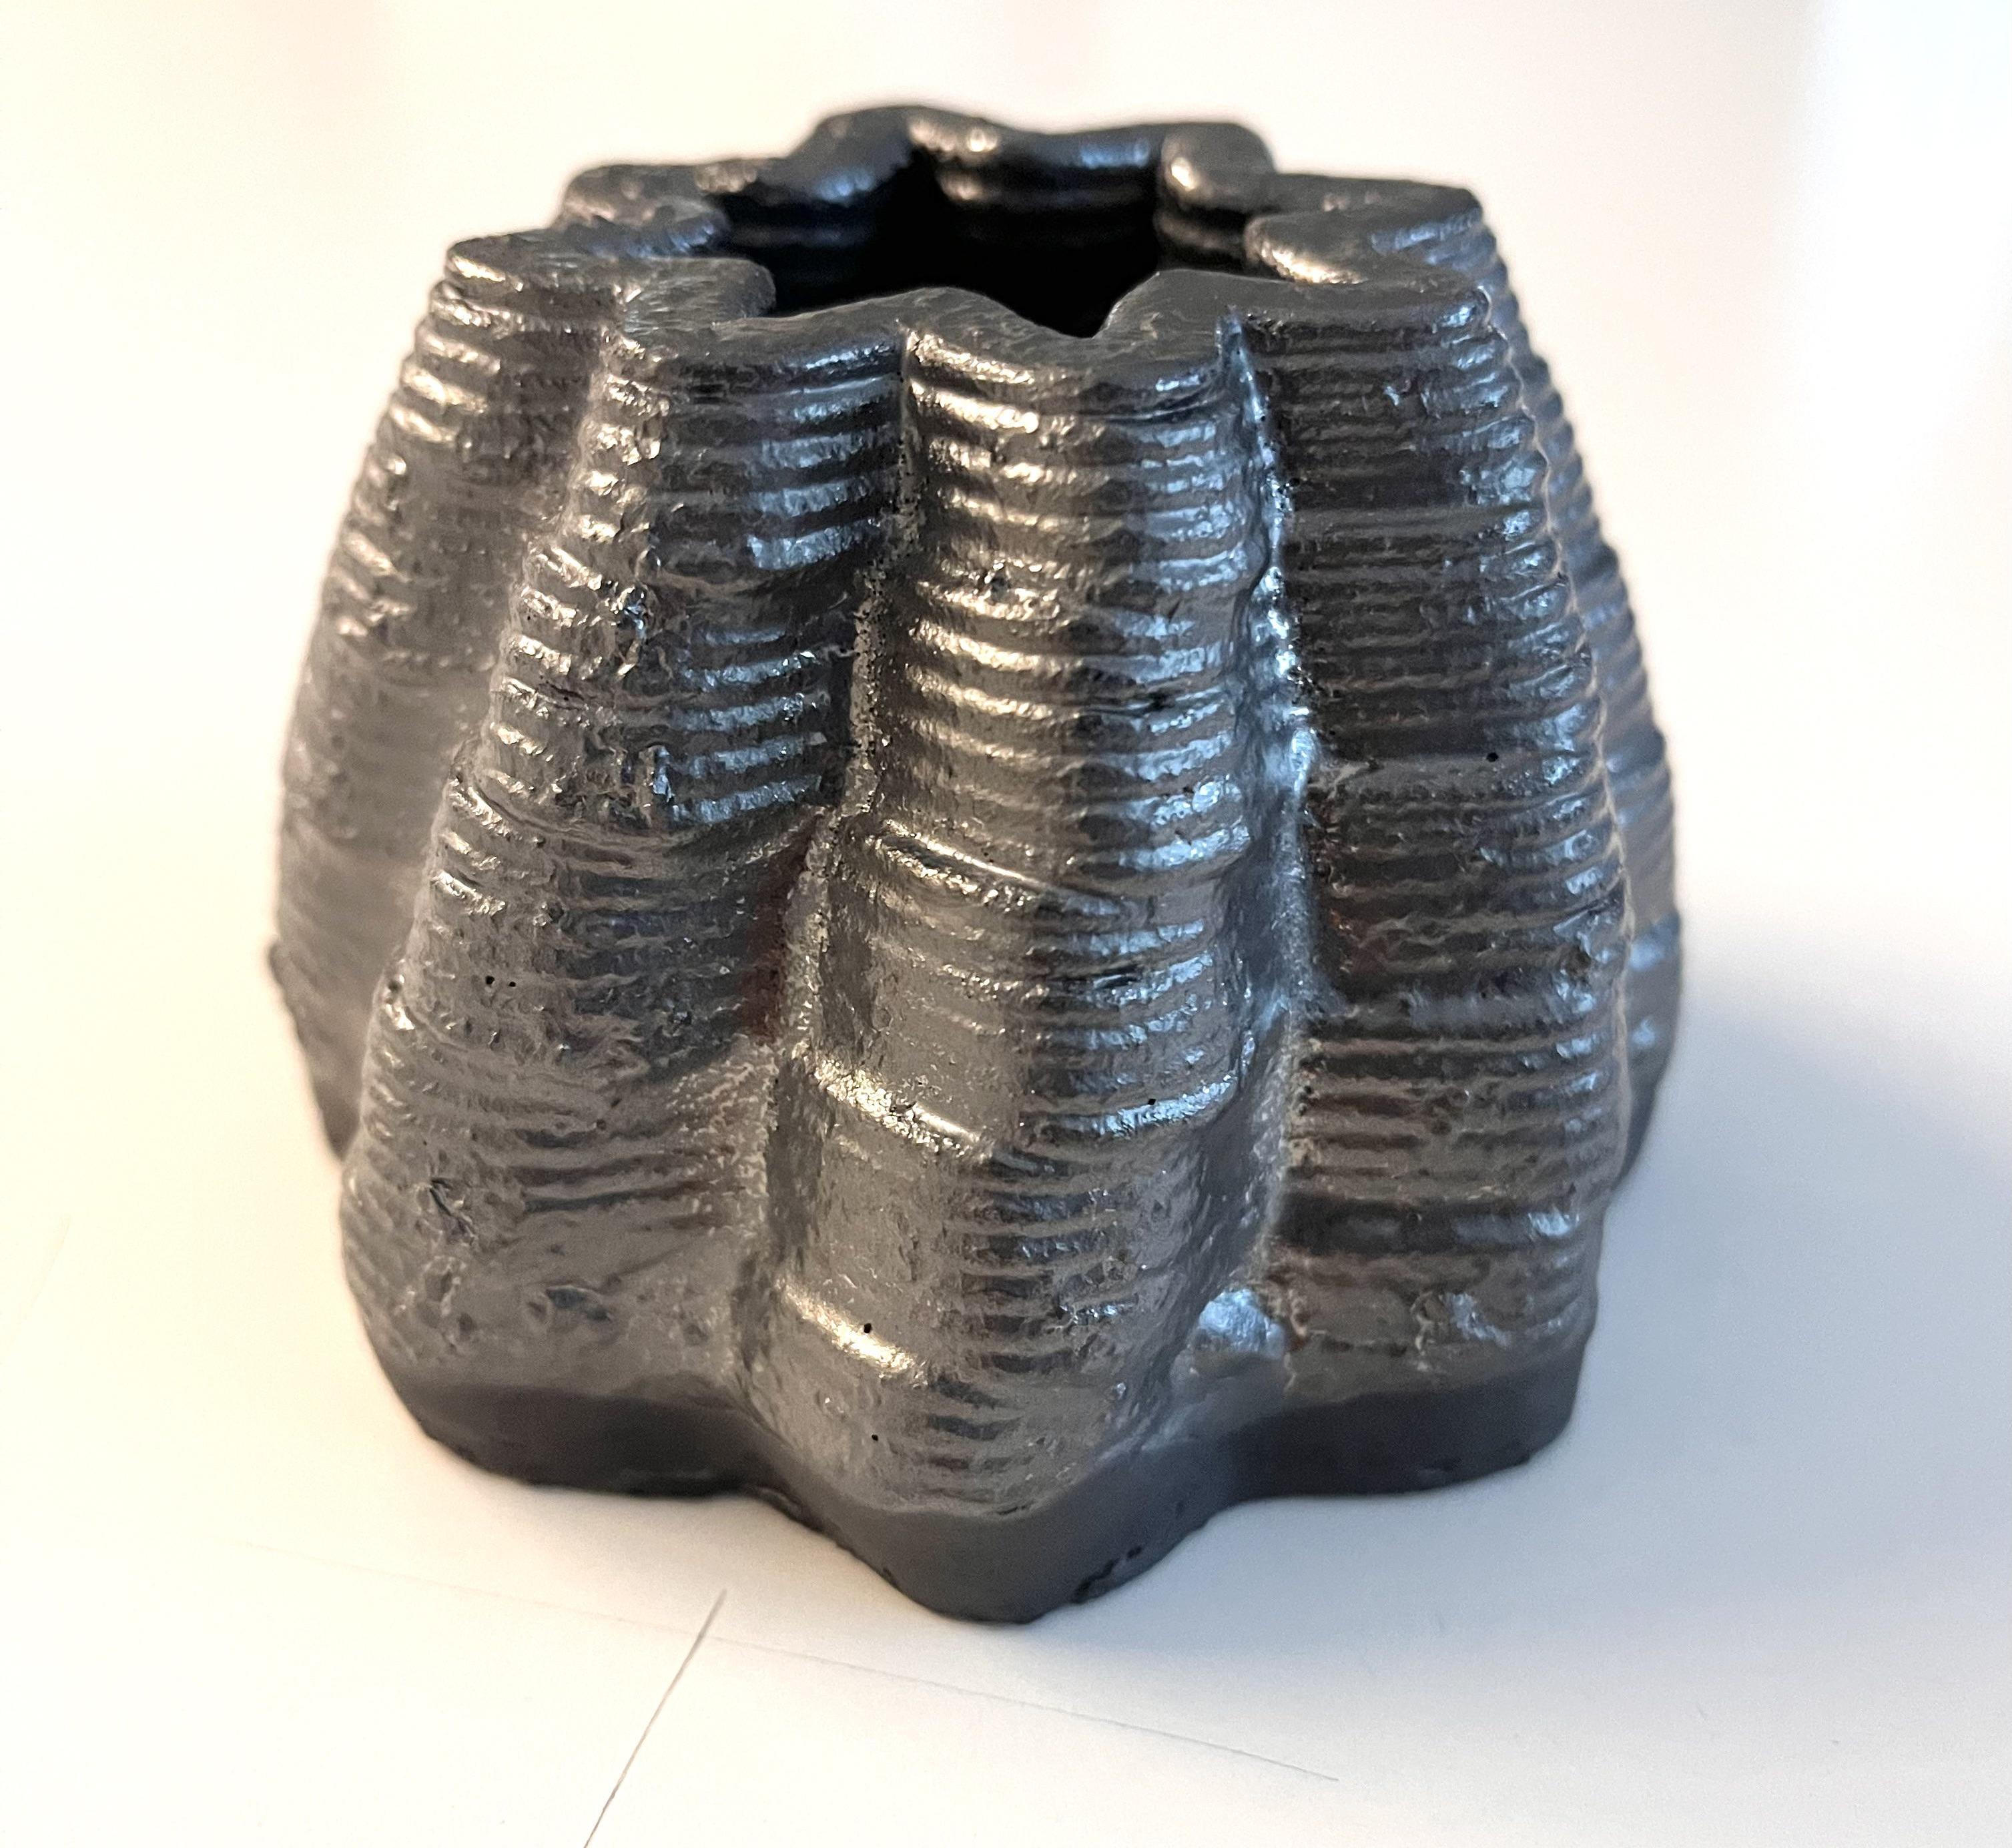 3D Printed Clay Sculptures